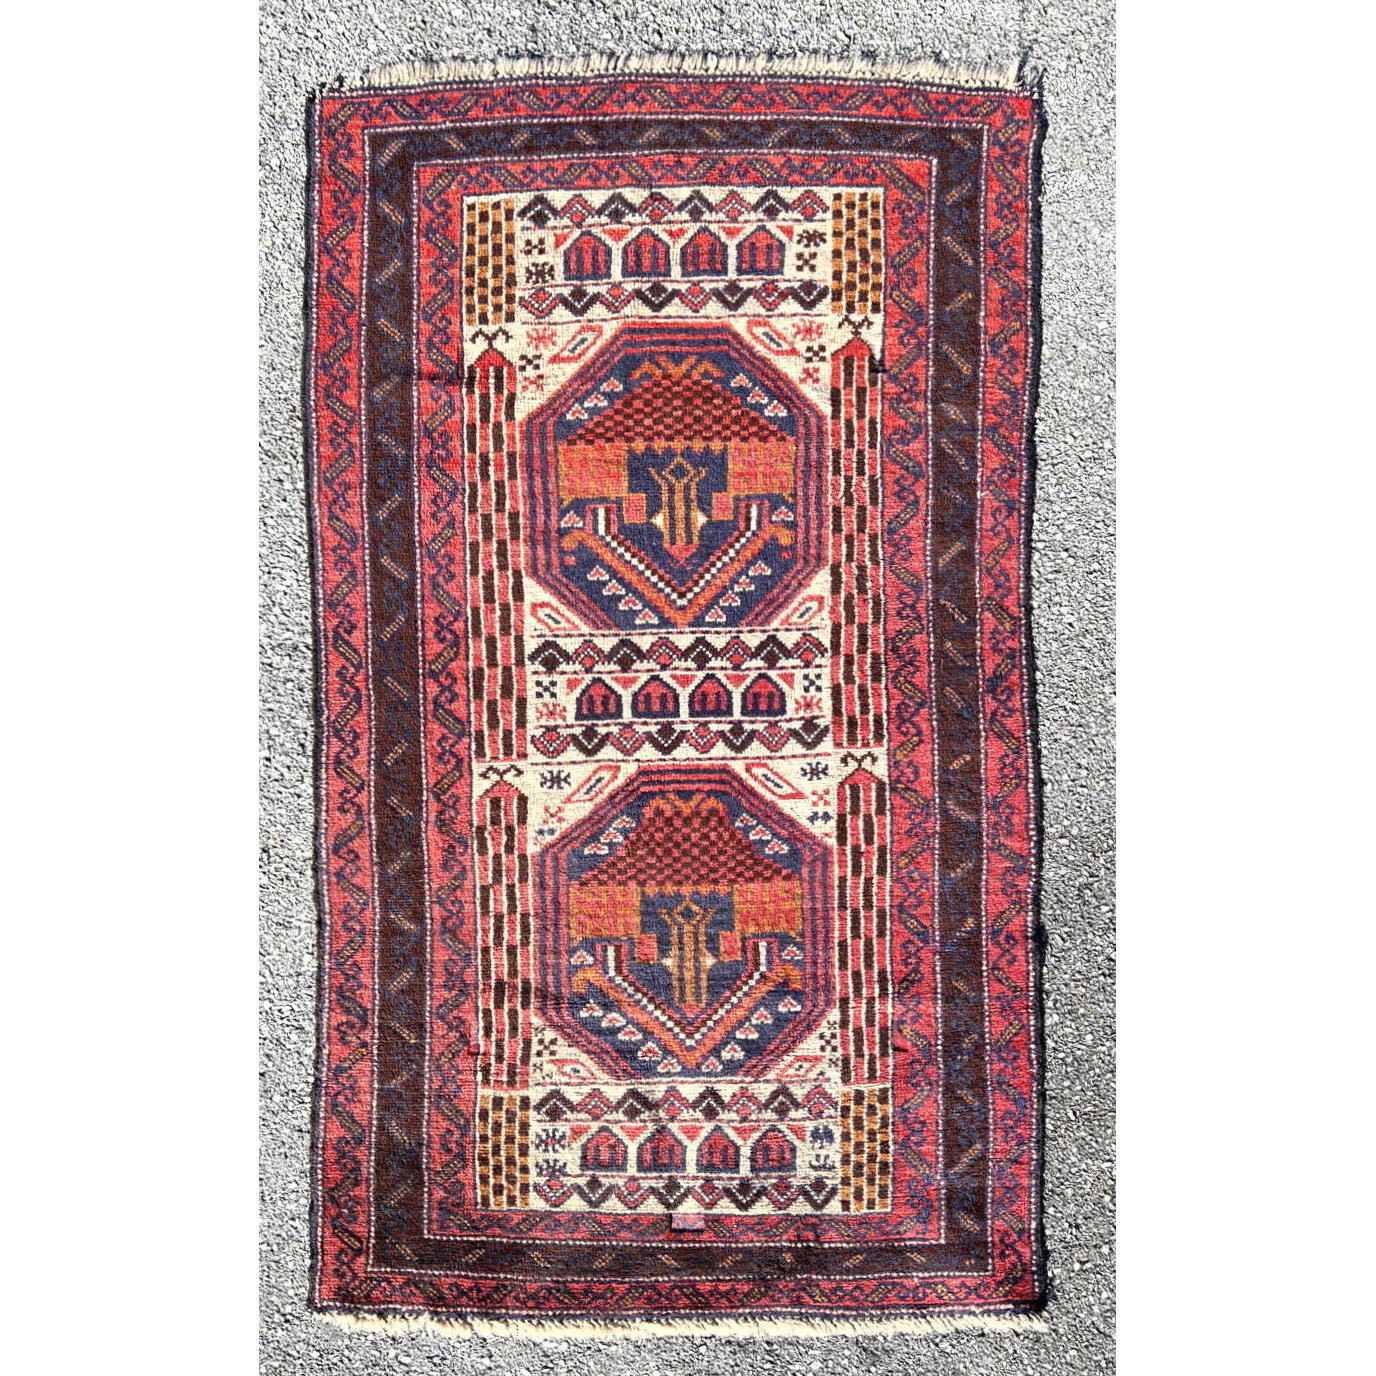 6 4 x 3 6 Handmade Oriental Carpet 2b92b0